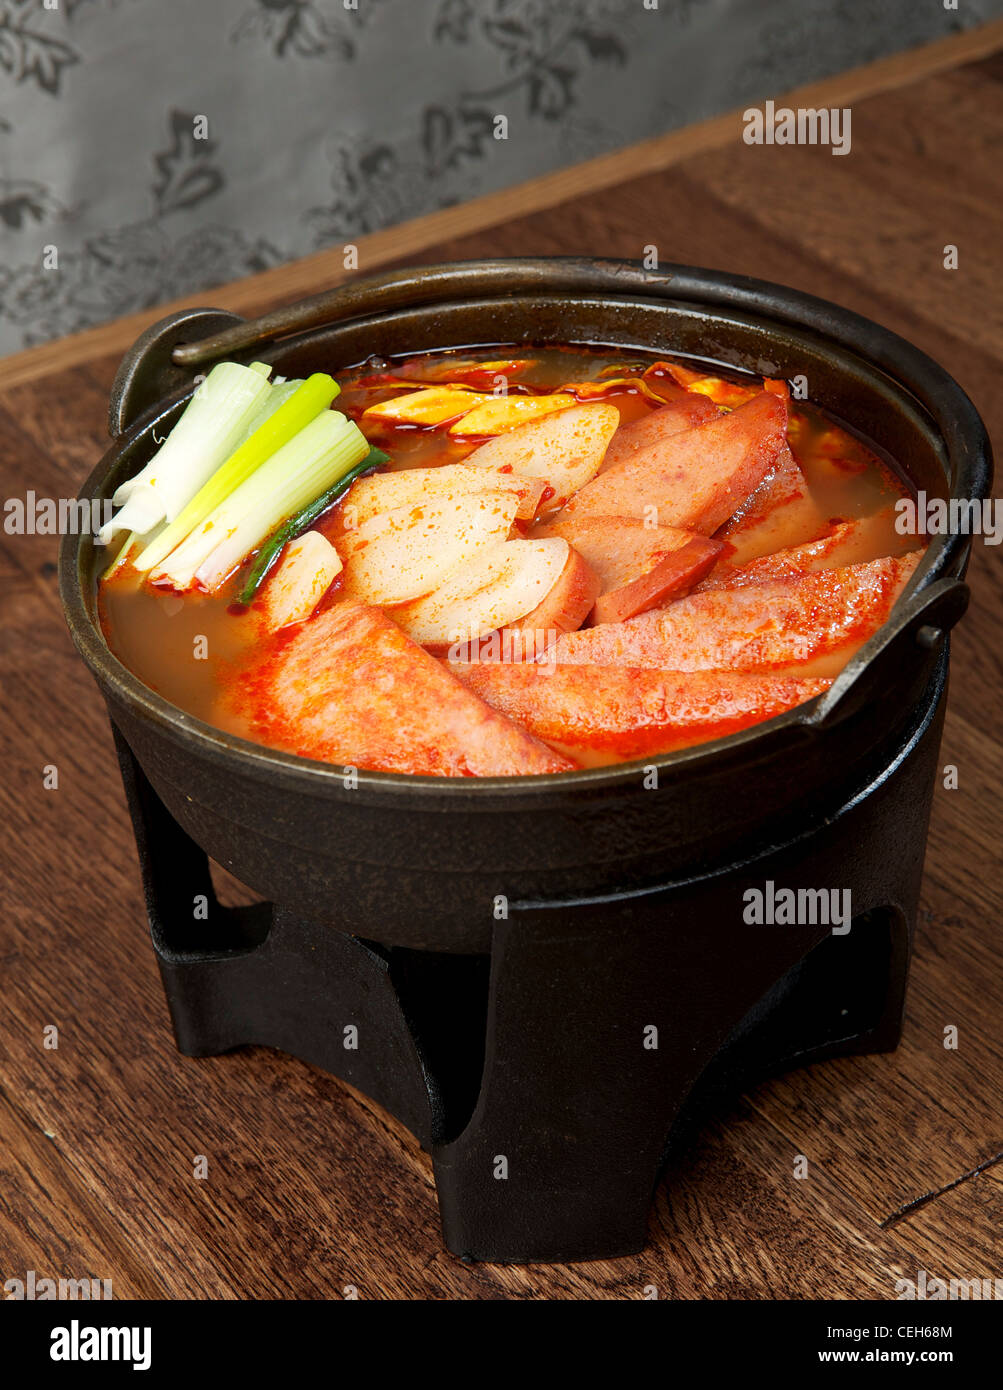 Royal Korean hot pot with pork sausage and vegetables Stock Photo